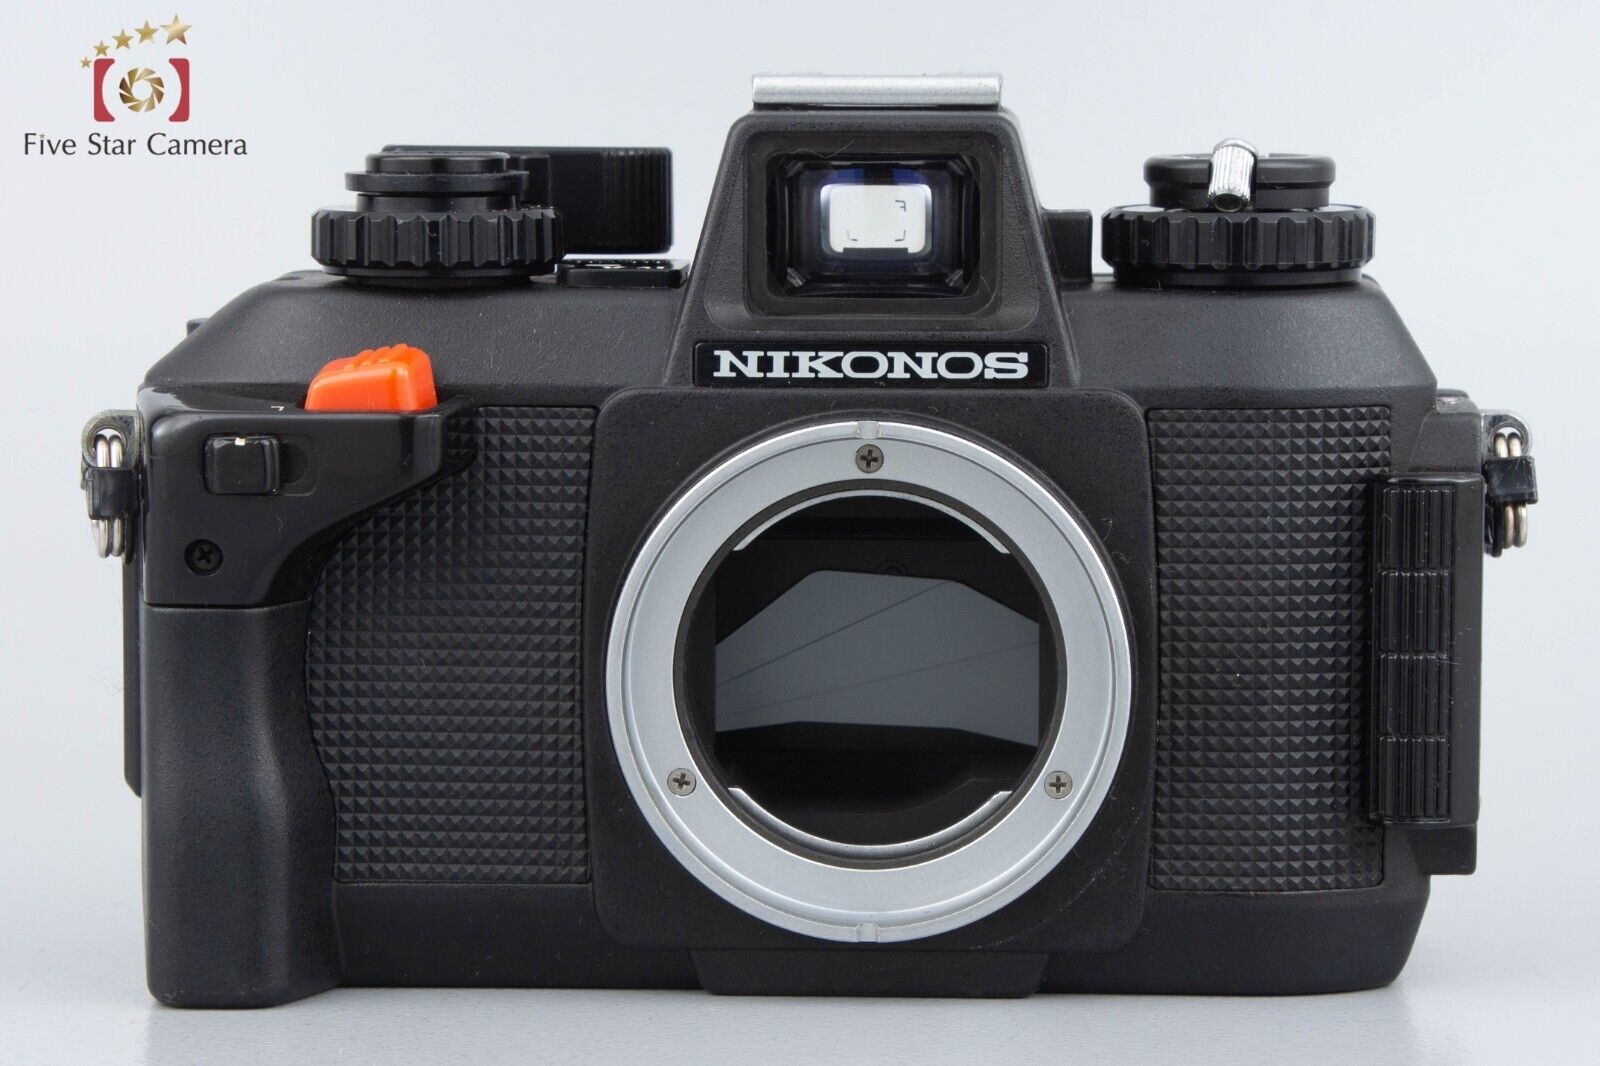 Nikon NIKONOS-IV-A 35mm Underwater Film Camera + NIKKOR 35mm f/2.5 w/ Box